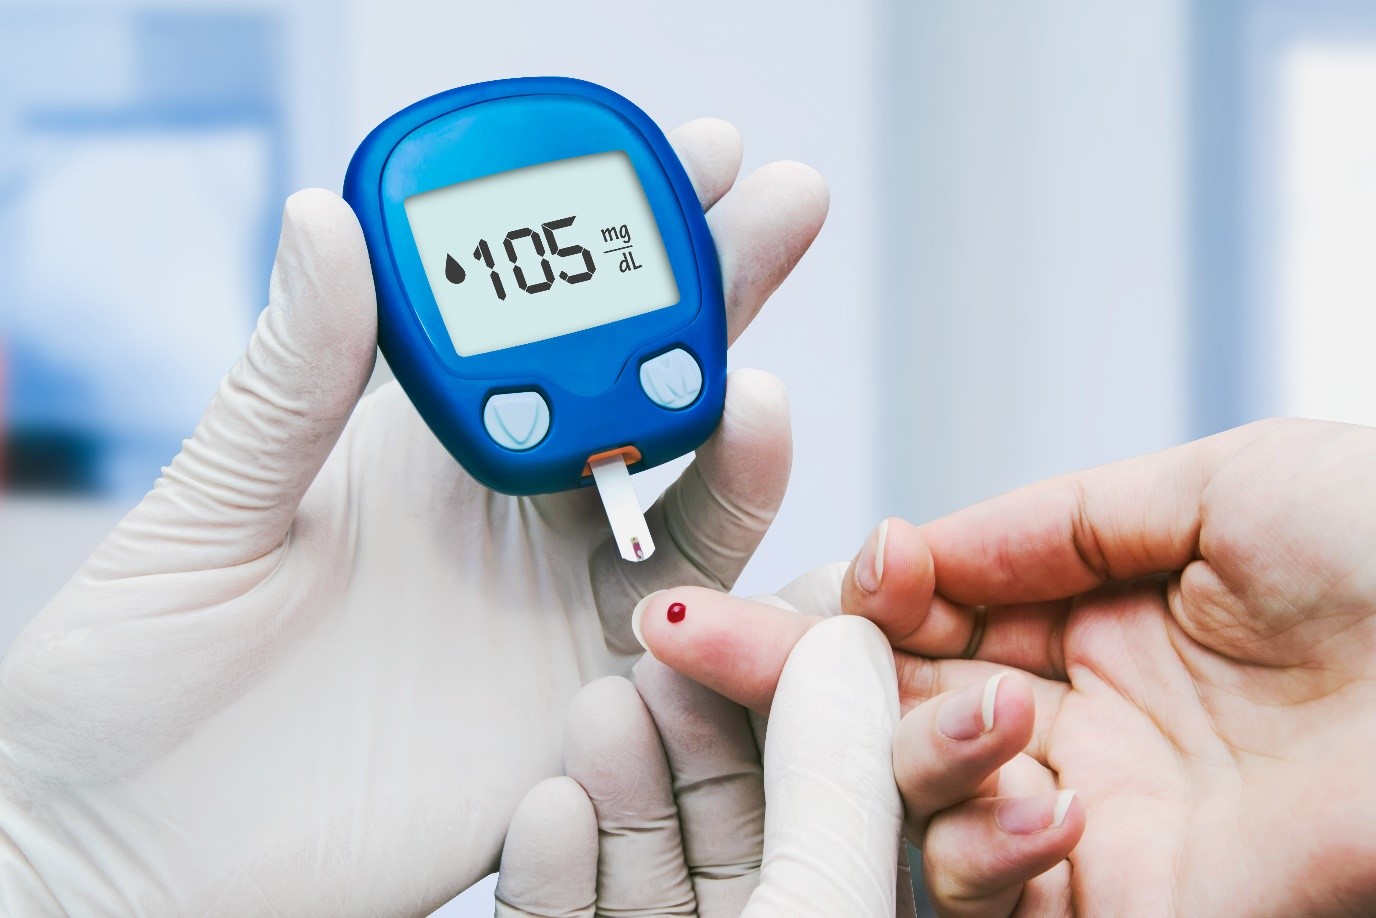 Serum irisin levels in new-onset type 2 diabetes